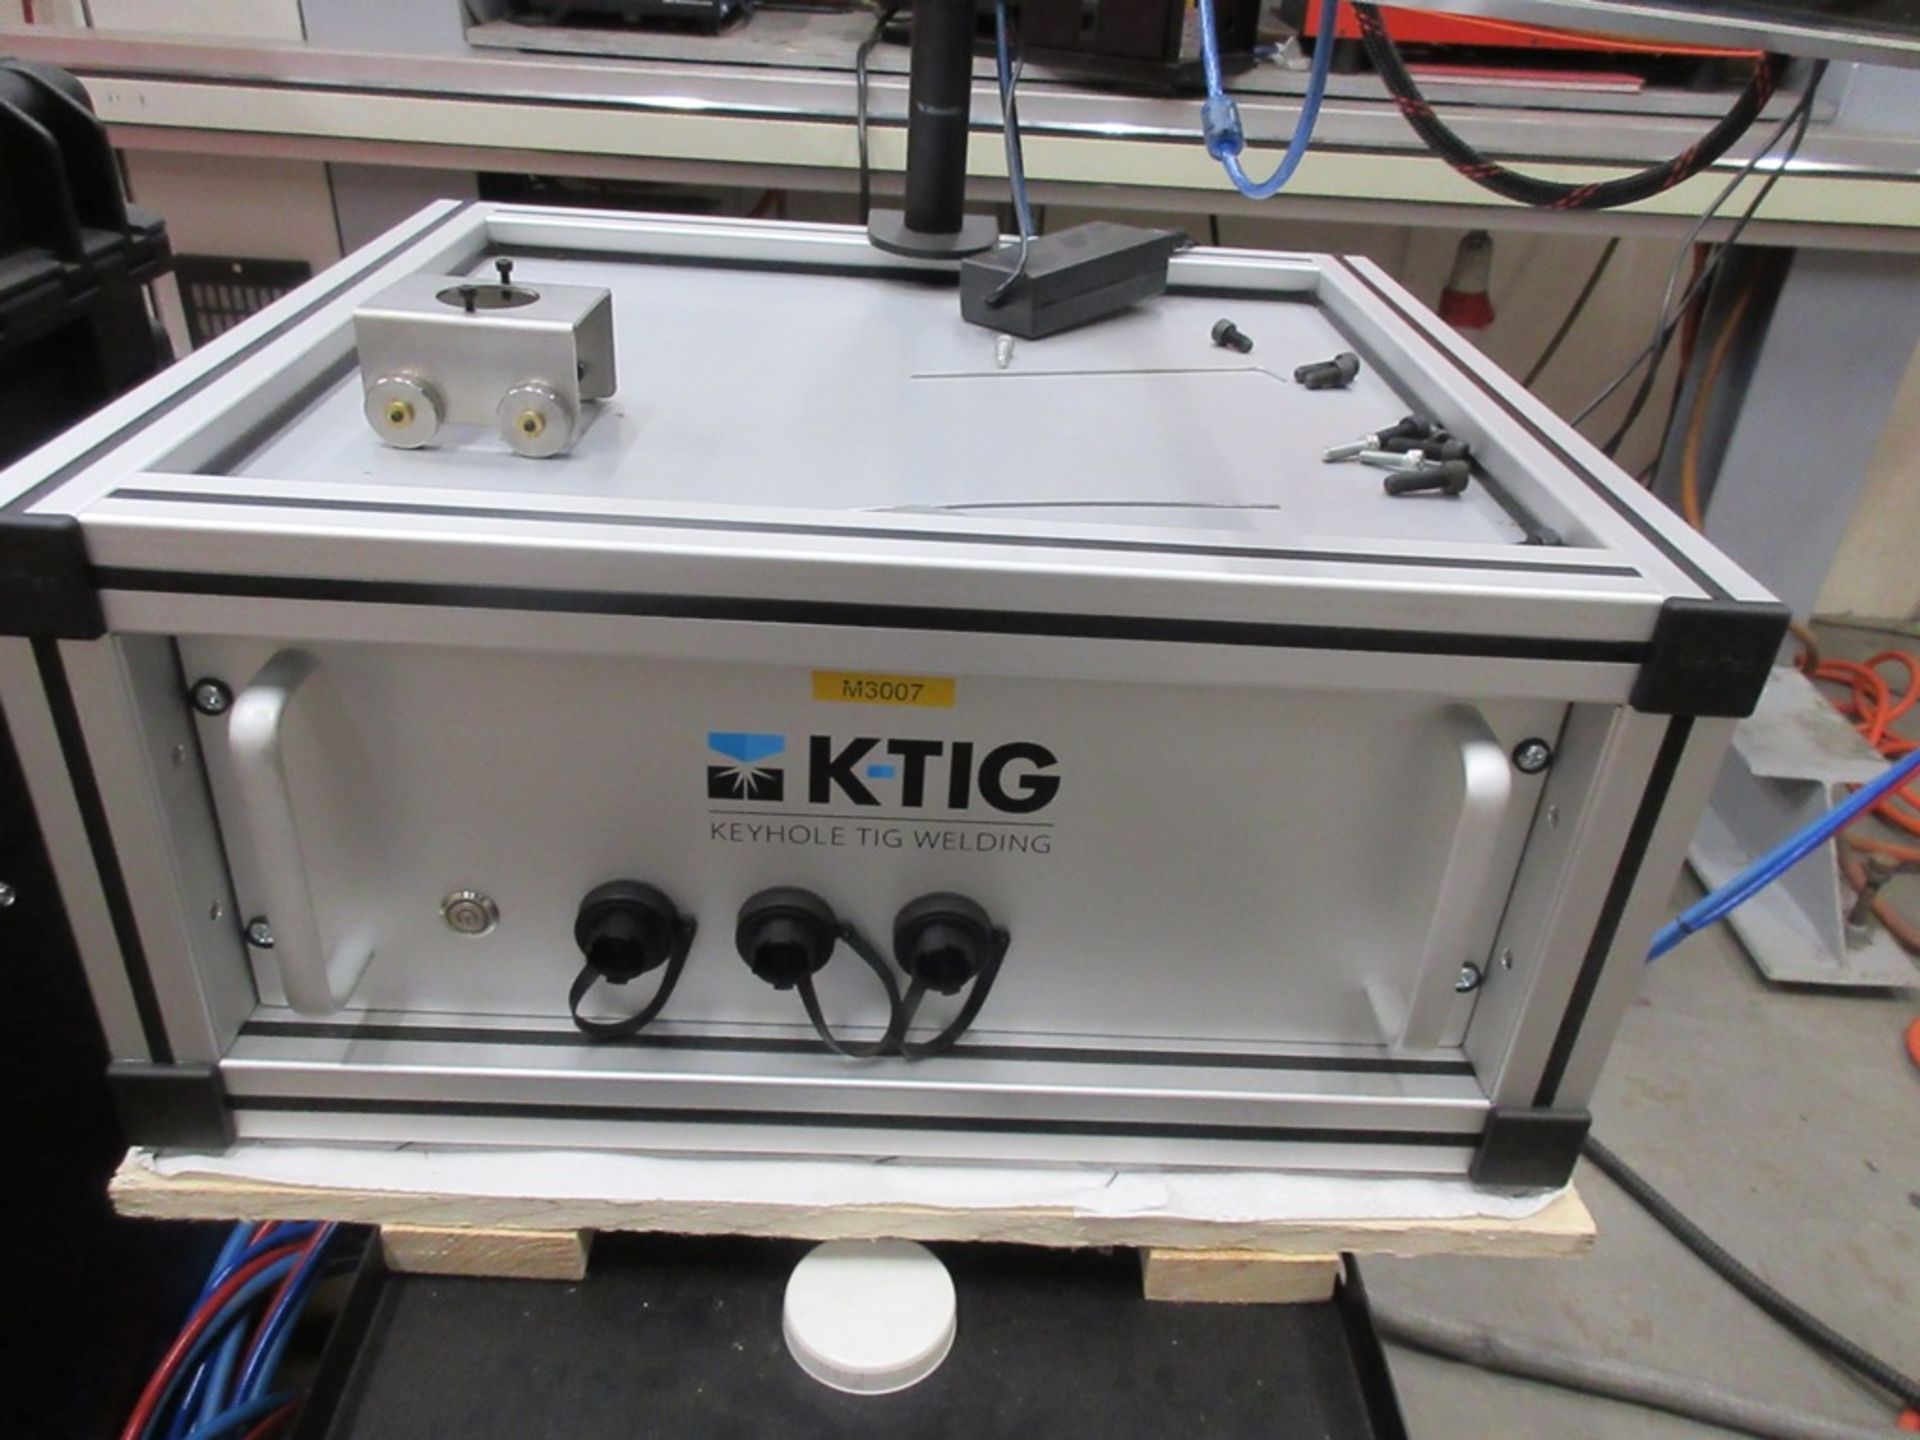 K-Tig Key hole tig welding system to include: - K-Tig 100 digital inverter SMAW-Tig arc welding - Image 4 of 12